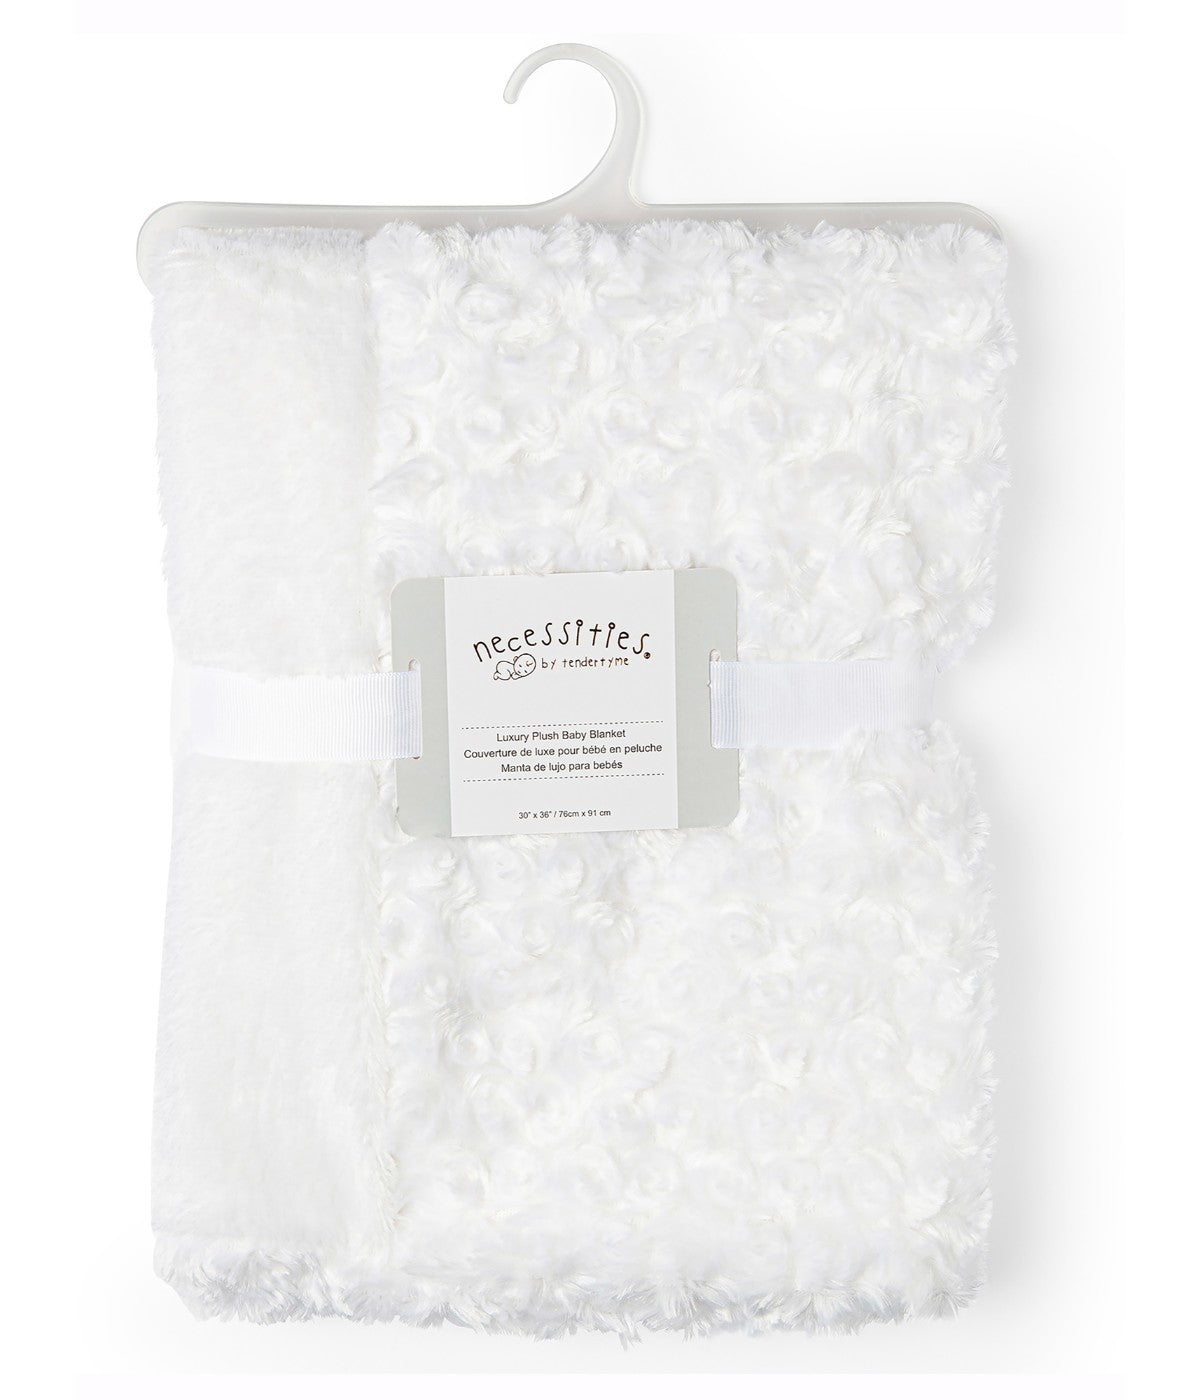 Baby Boys and Baby Girls Curly Plush Blanket with Matching Lovey Nunu Gift Set Plush White